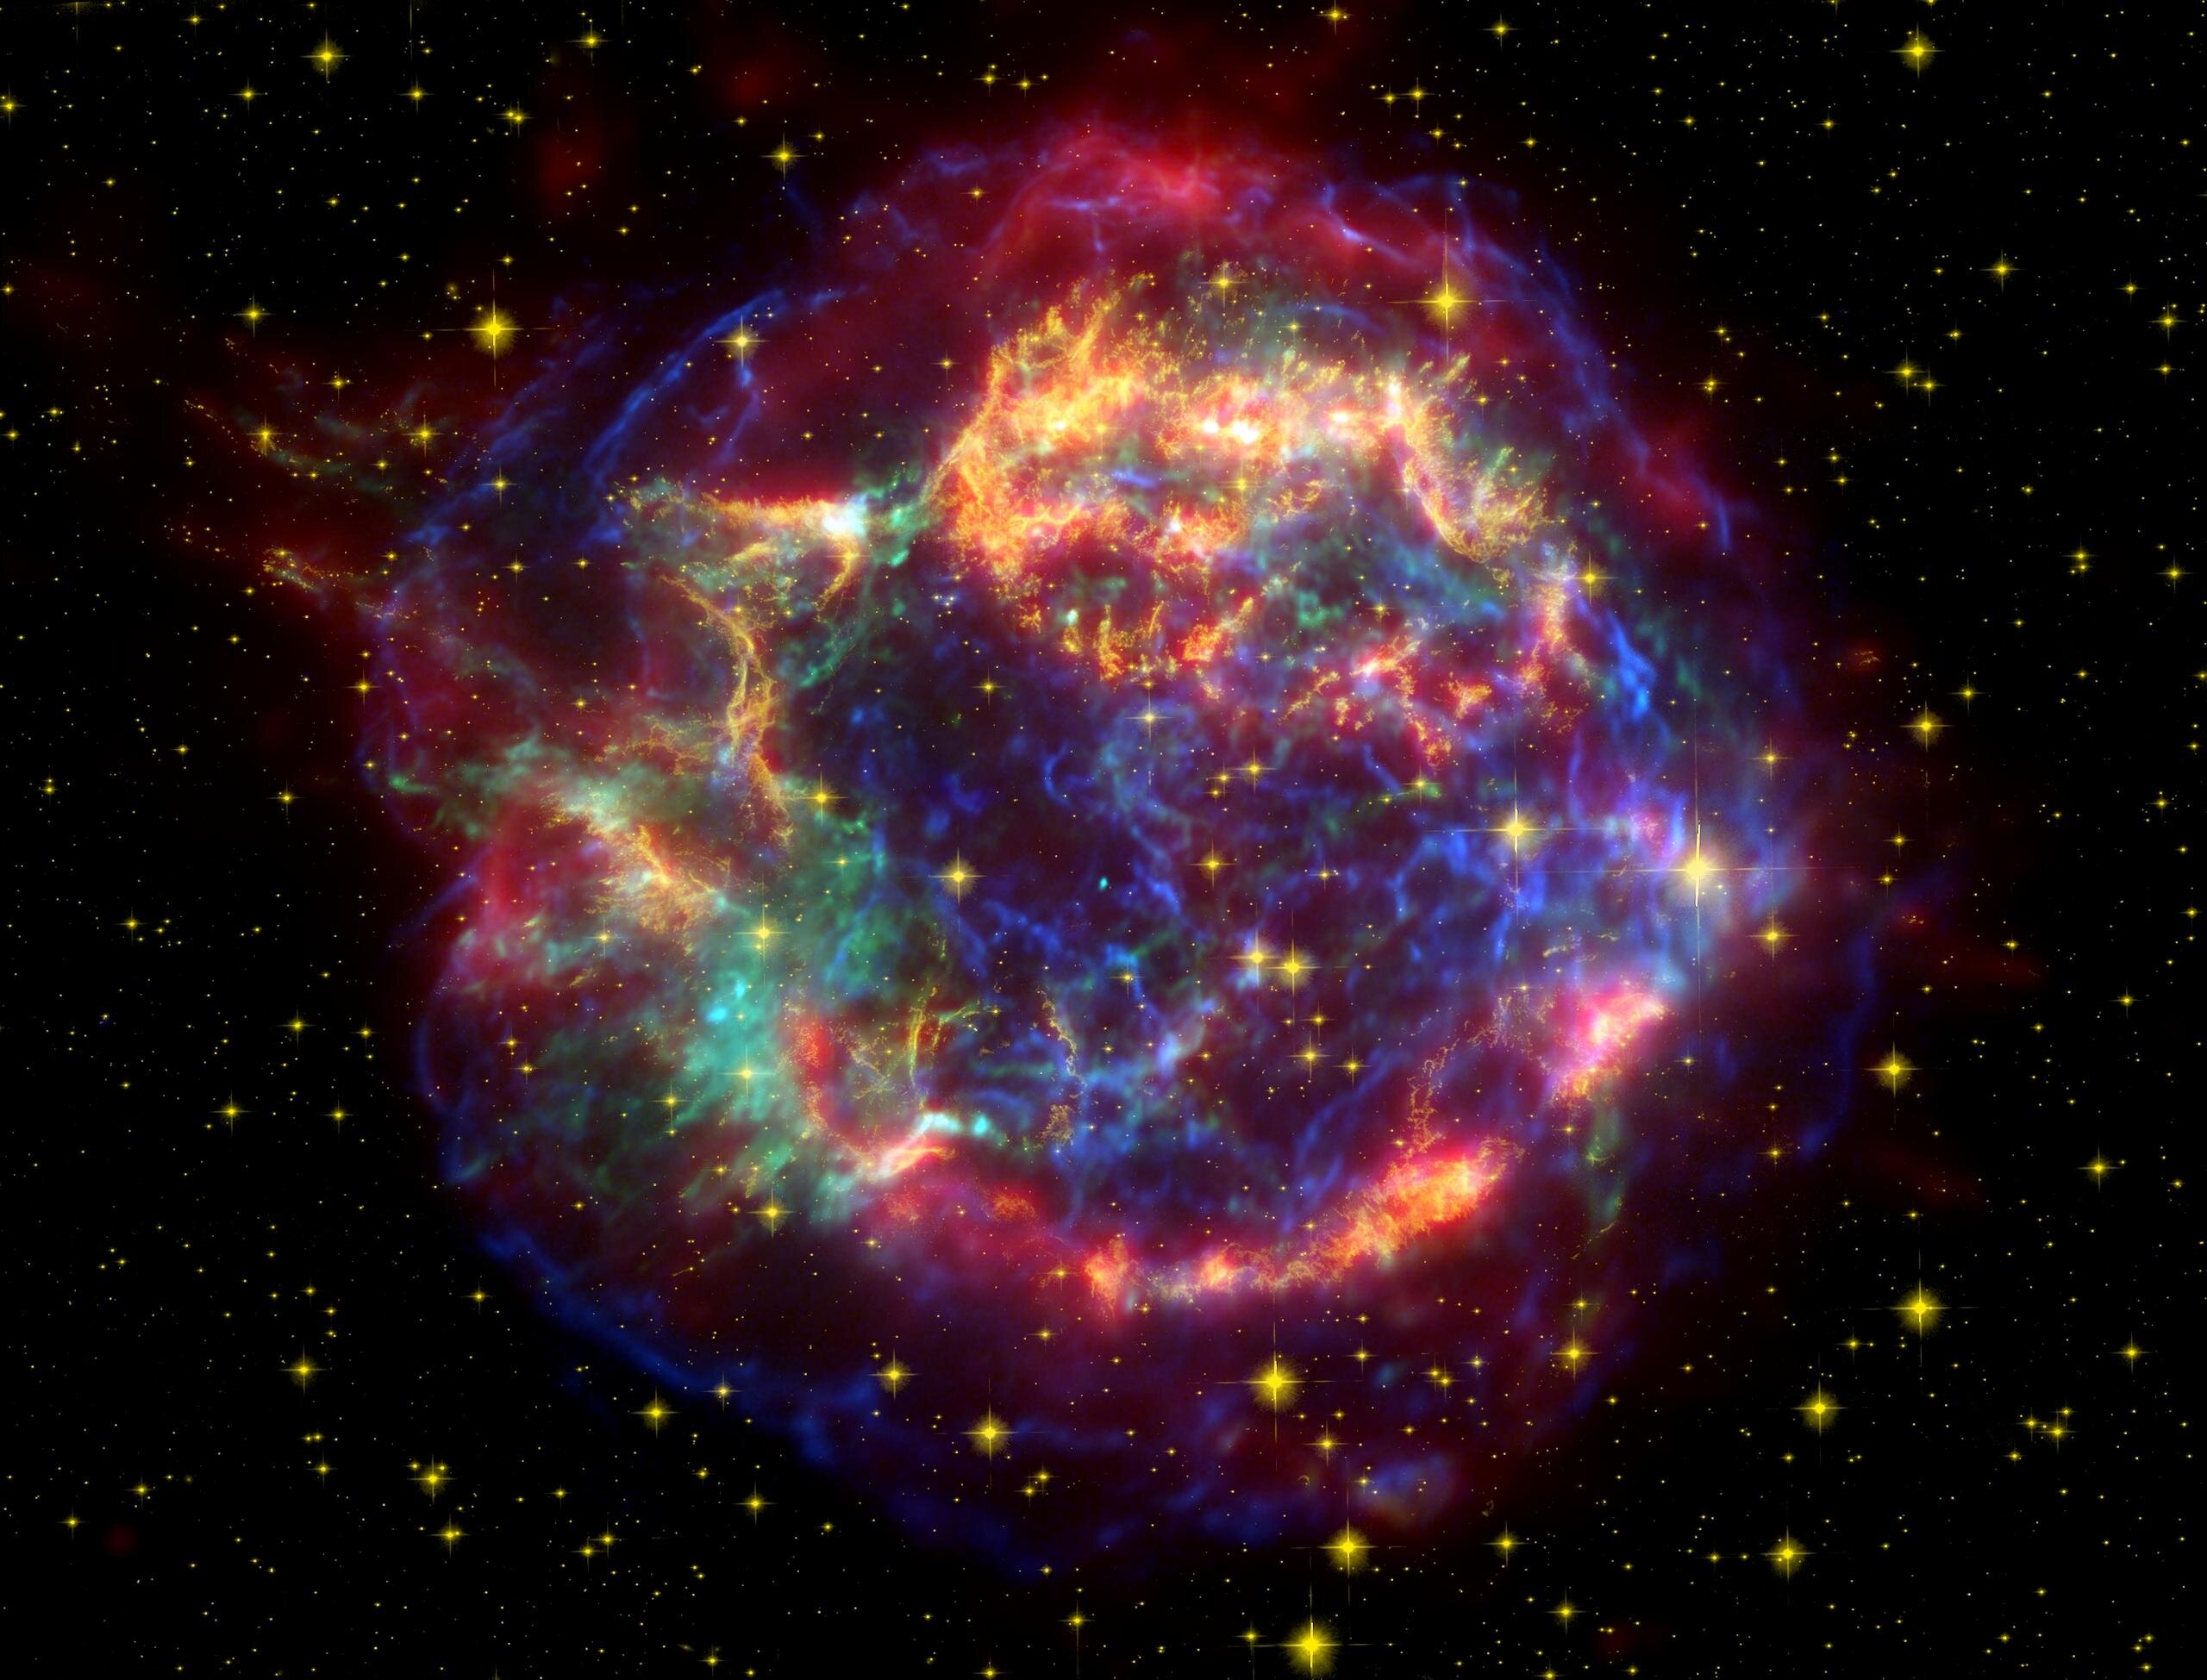 Rocket launch to image supernova remnant